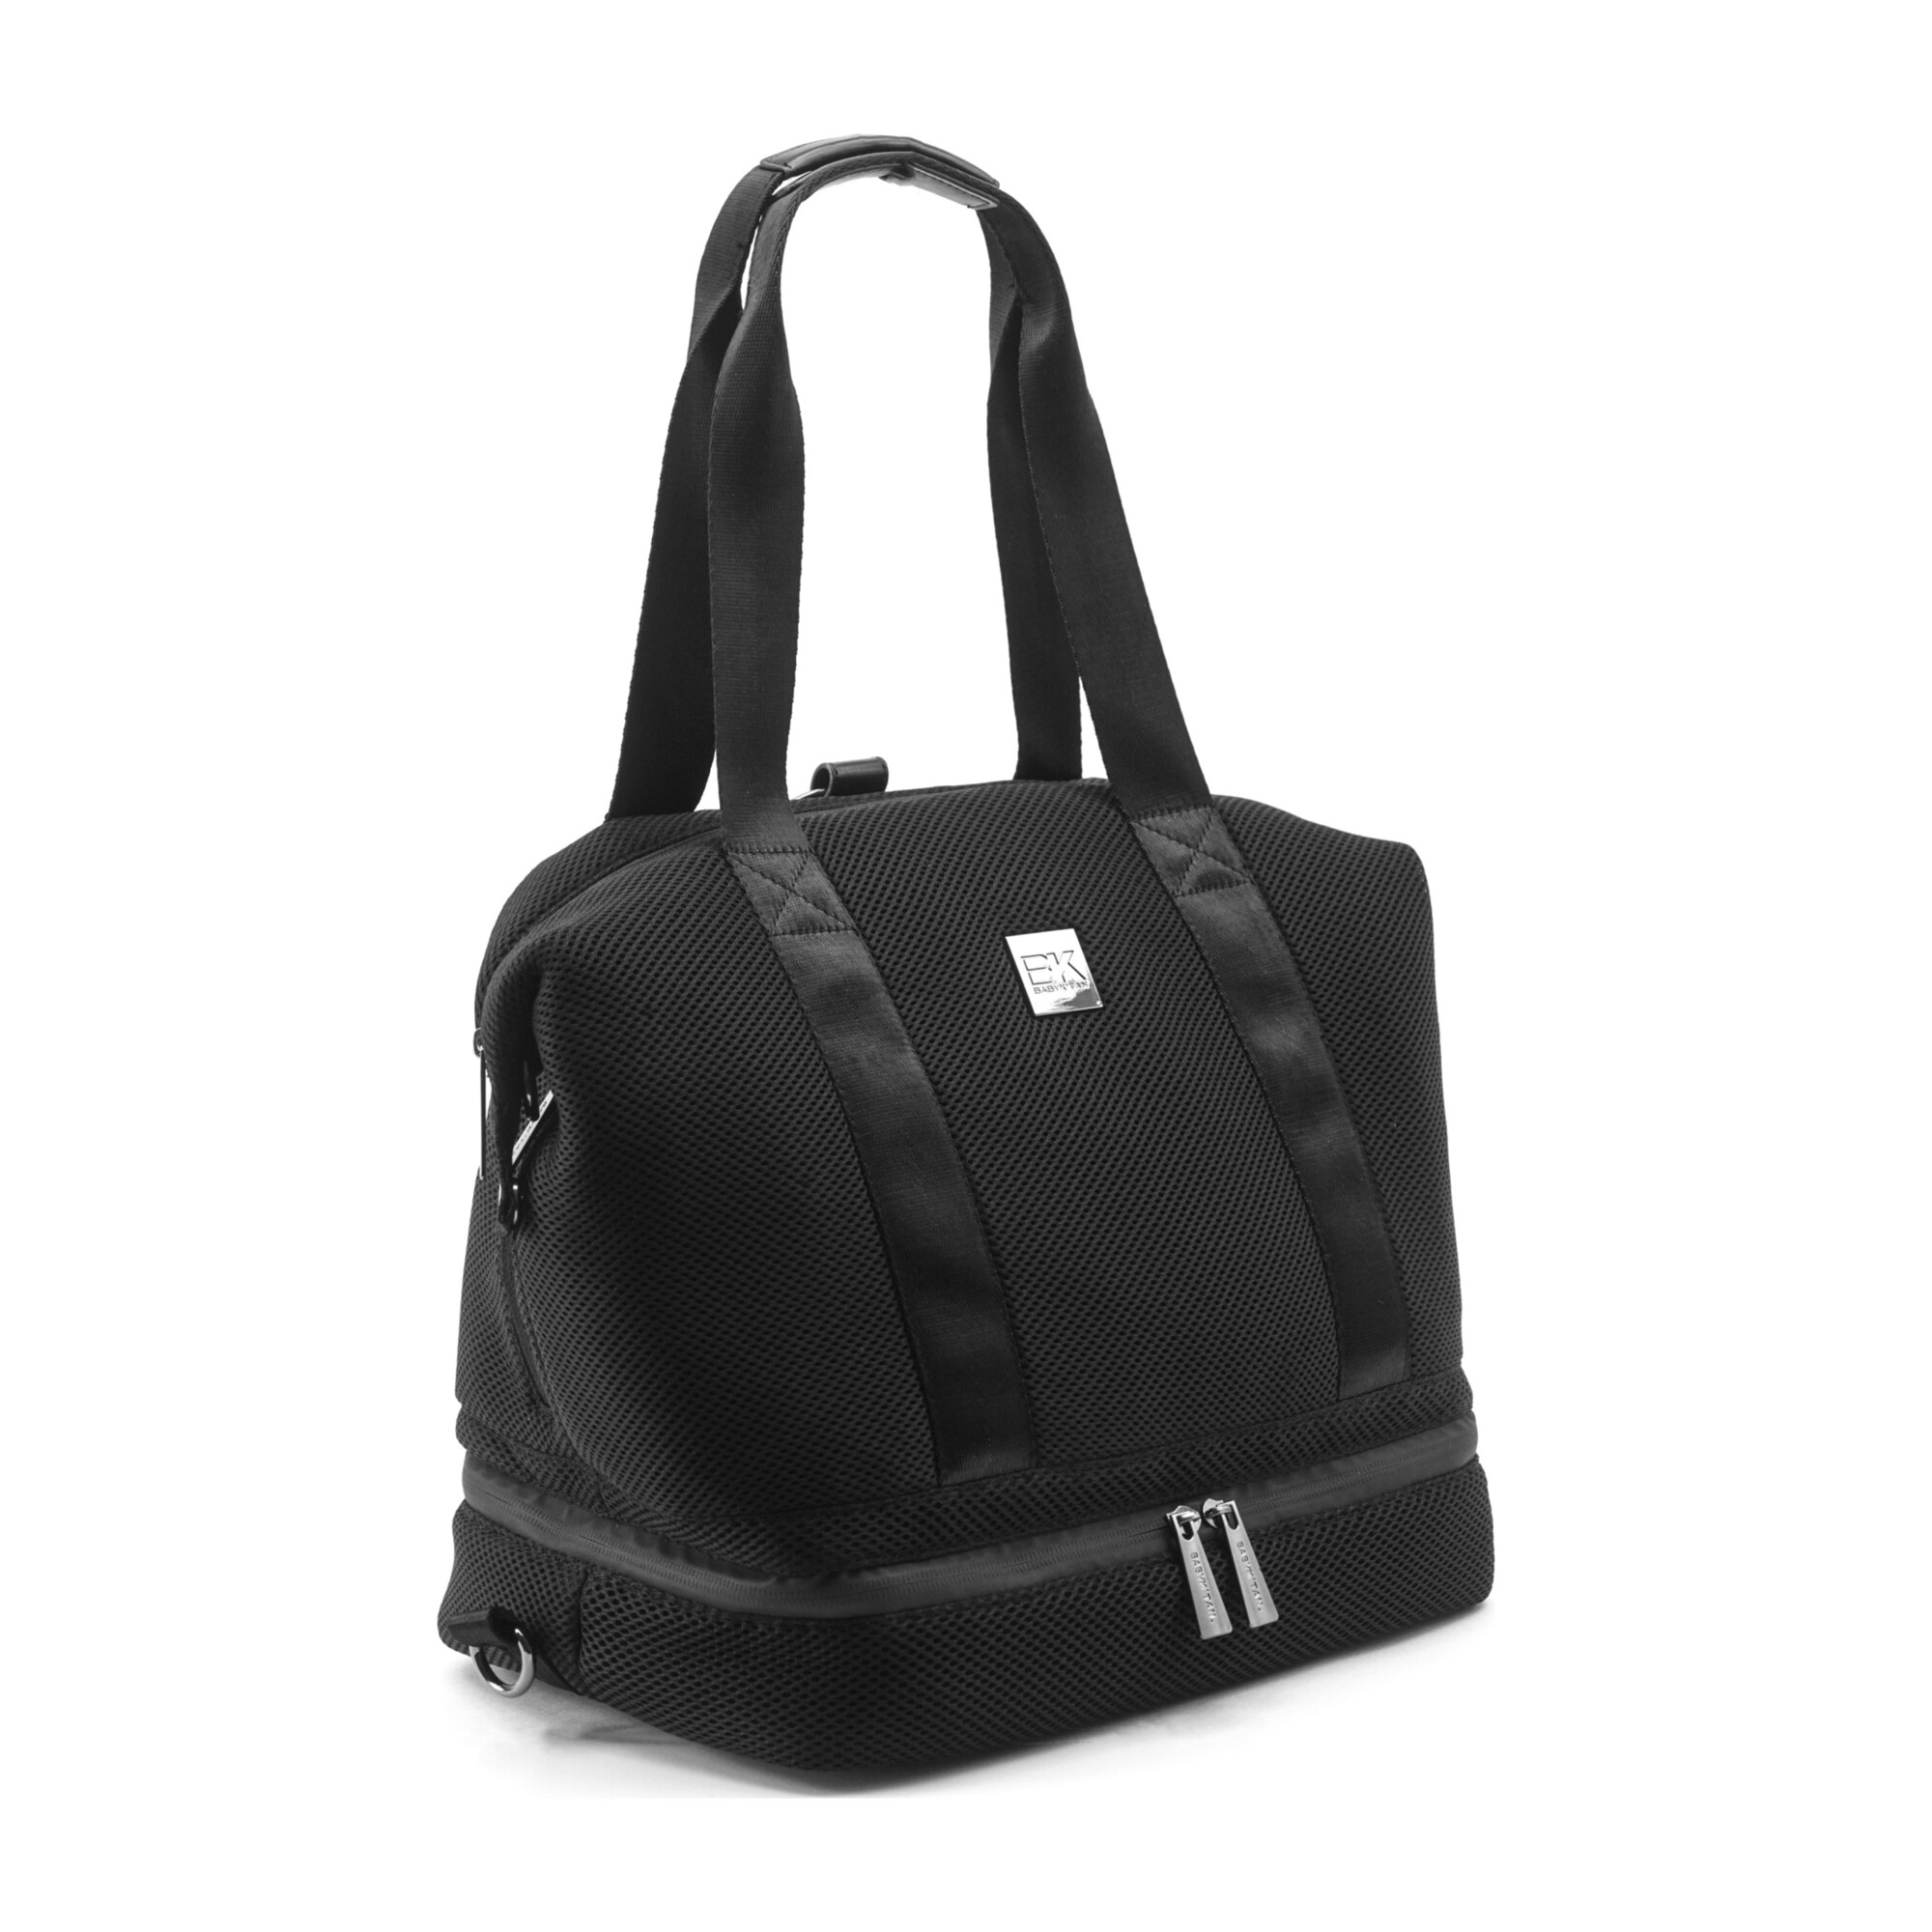 Flex Convertible Diaper Bag, Black Mesh - Gear Diaper Bags & Luggage ...